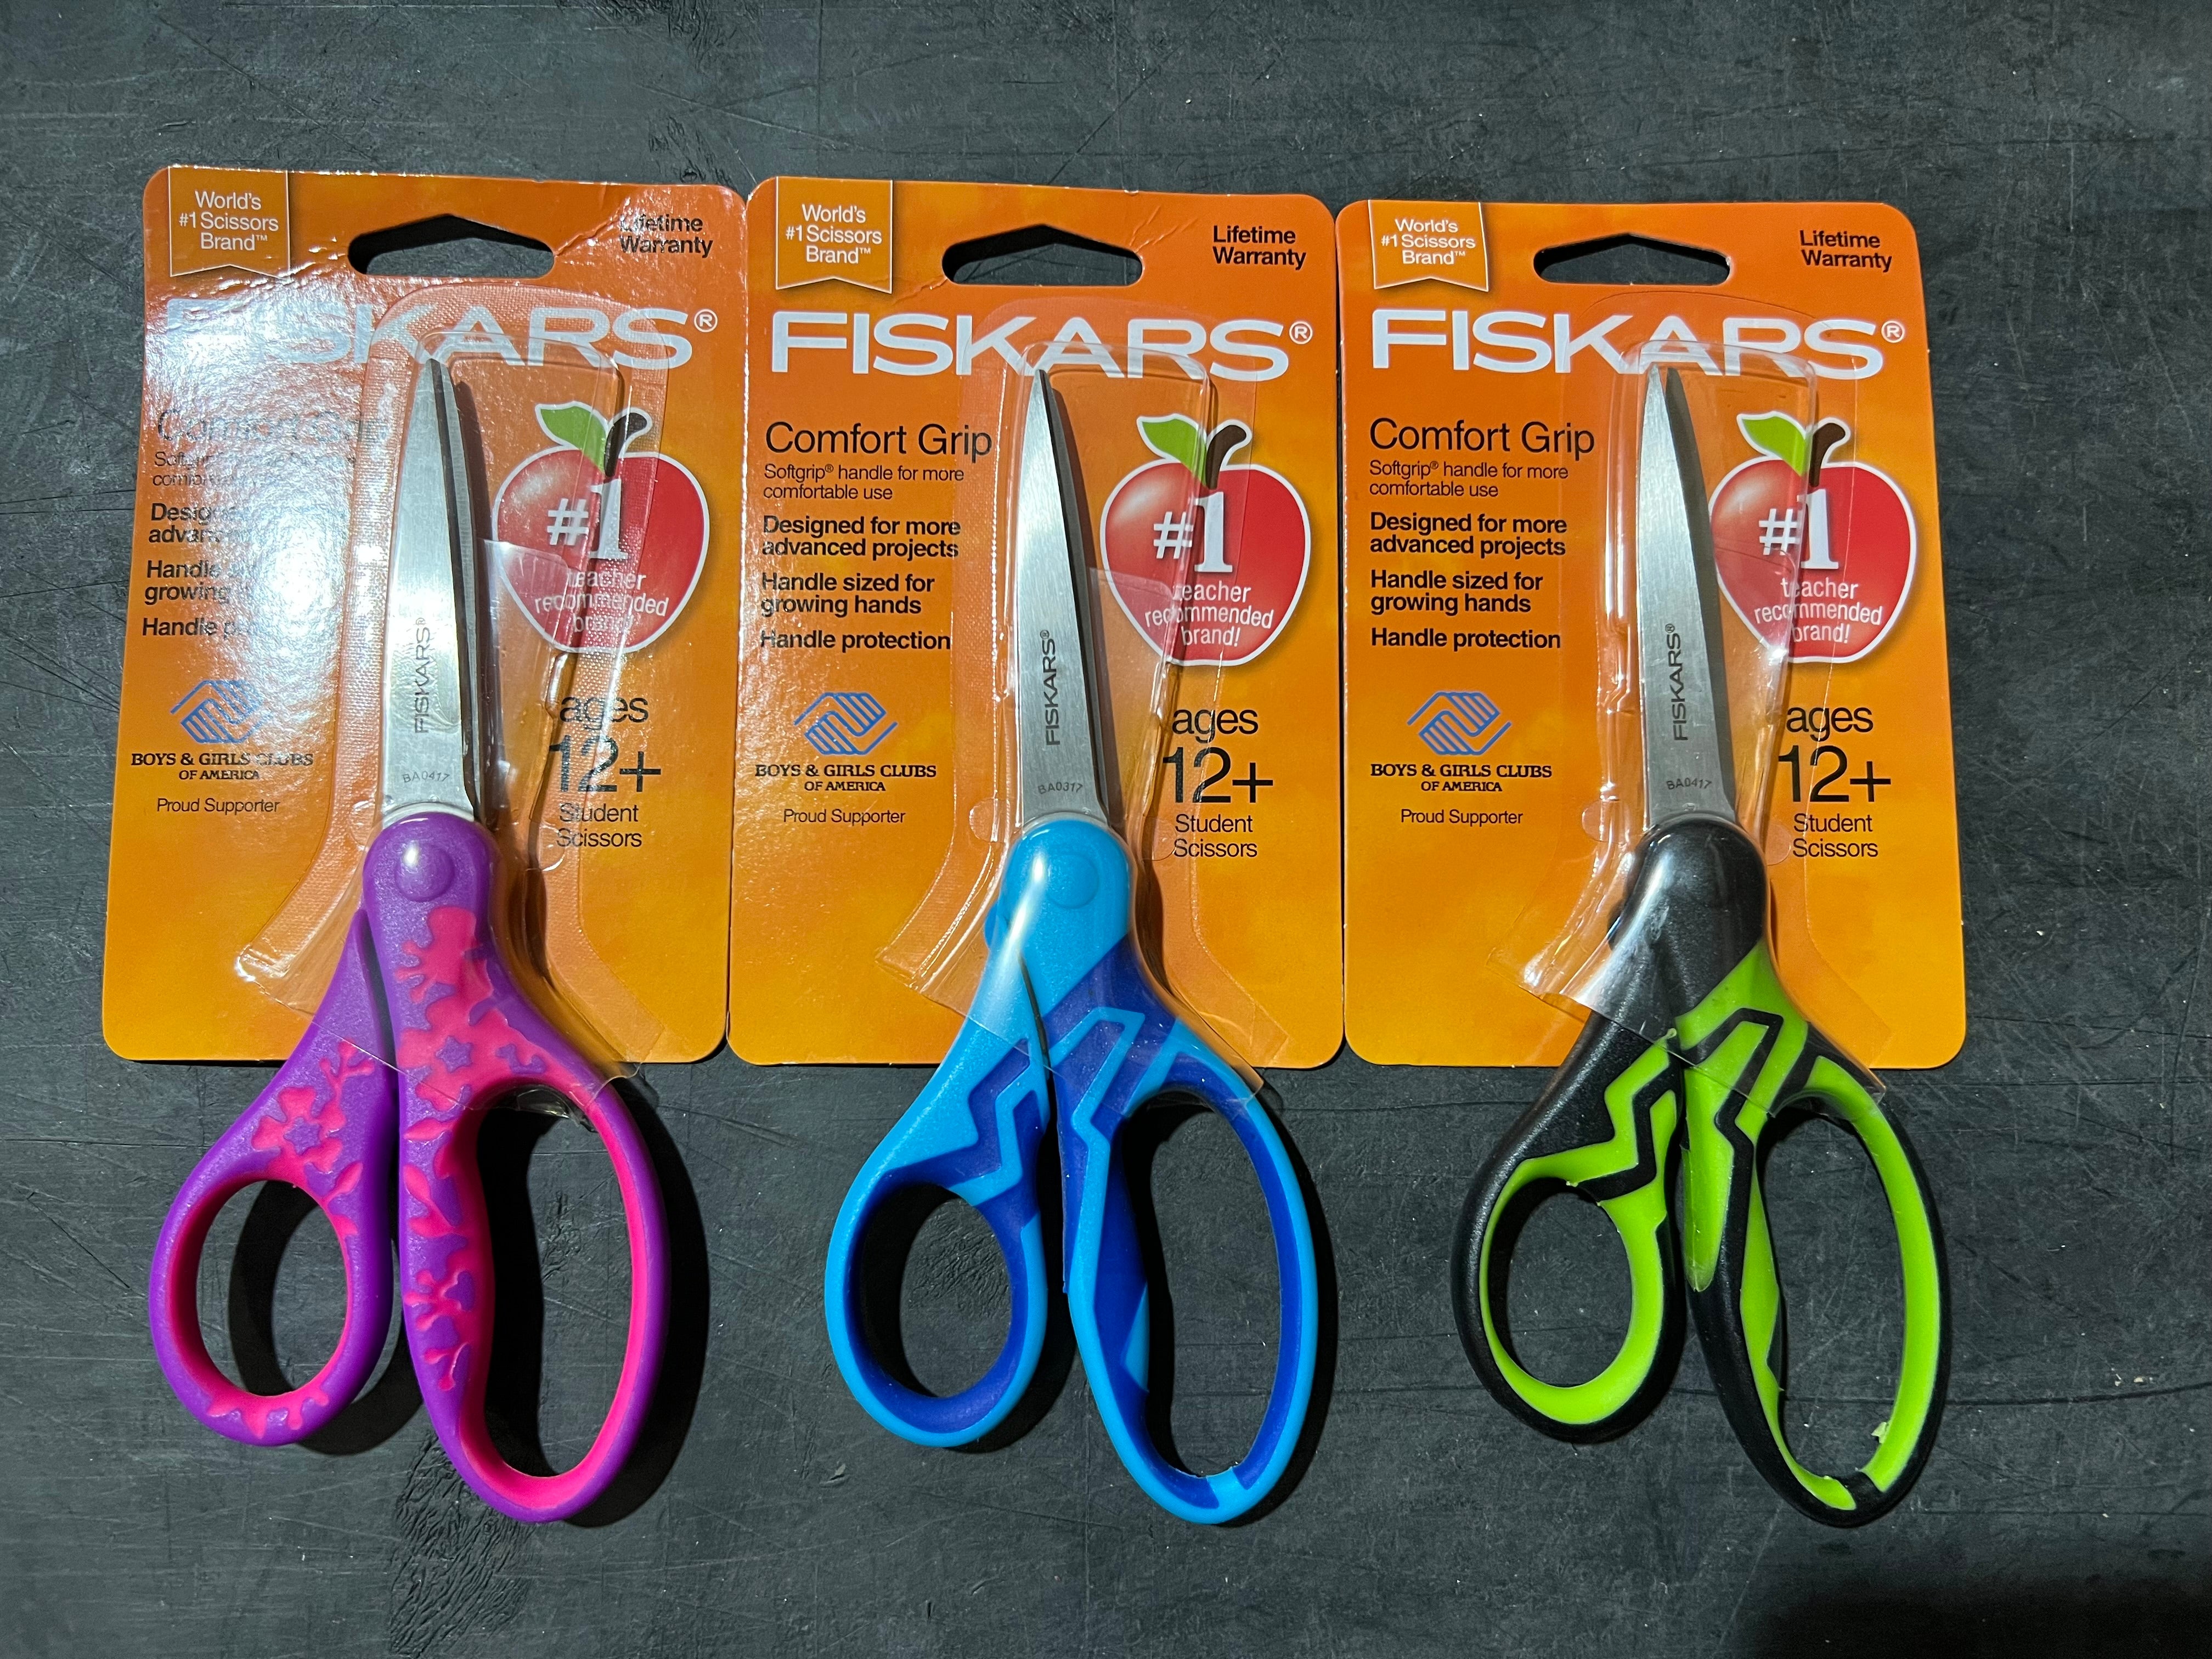 Fiskars - Fiskars, Ages 12+ Student - Scissors, Student, Ages 12+